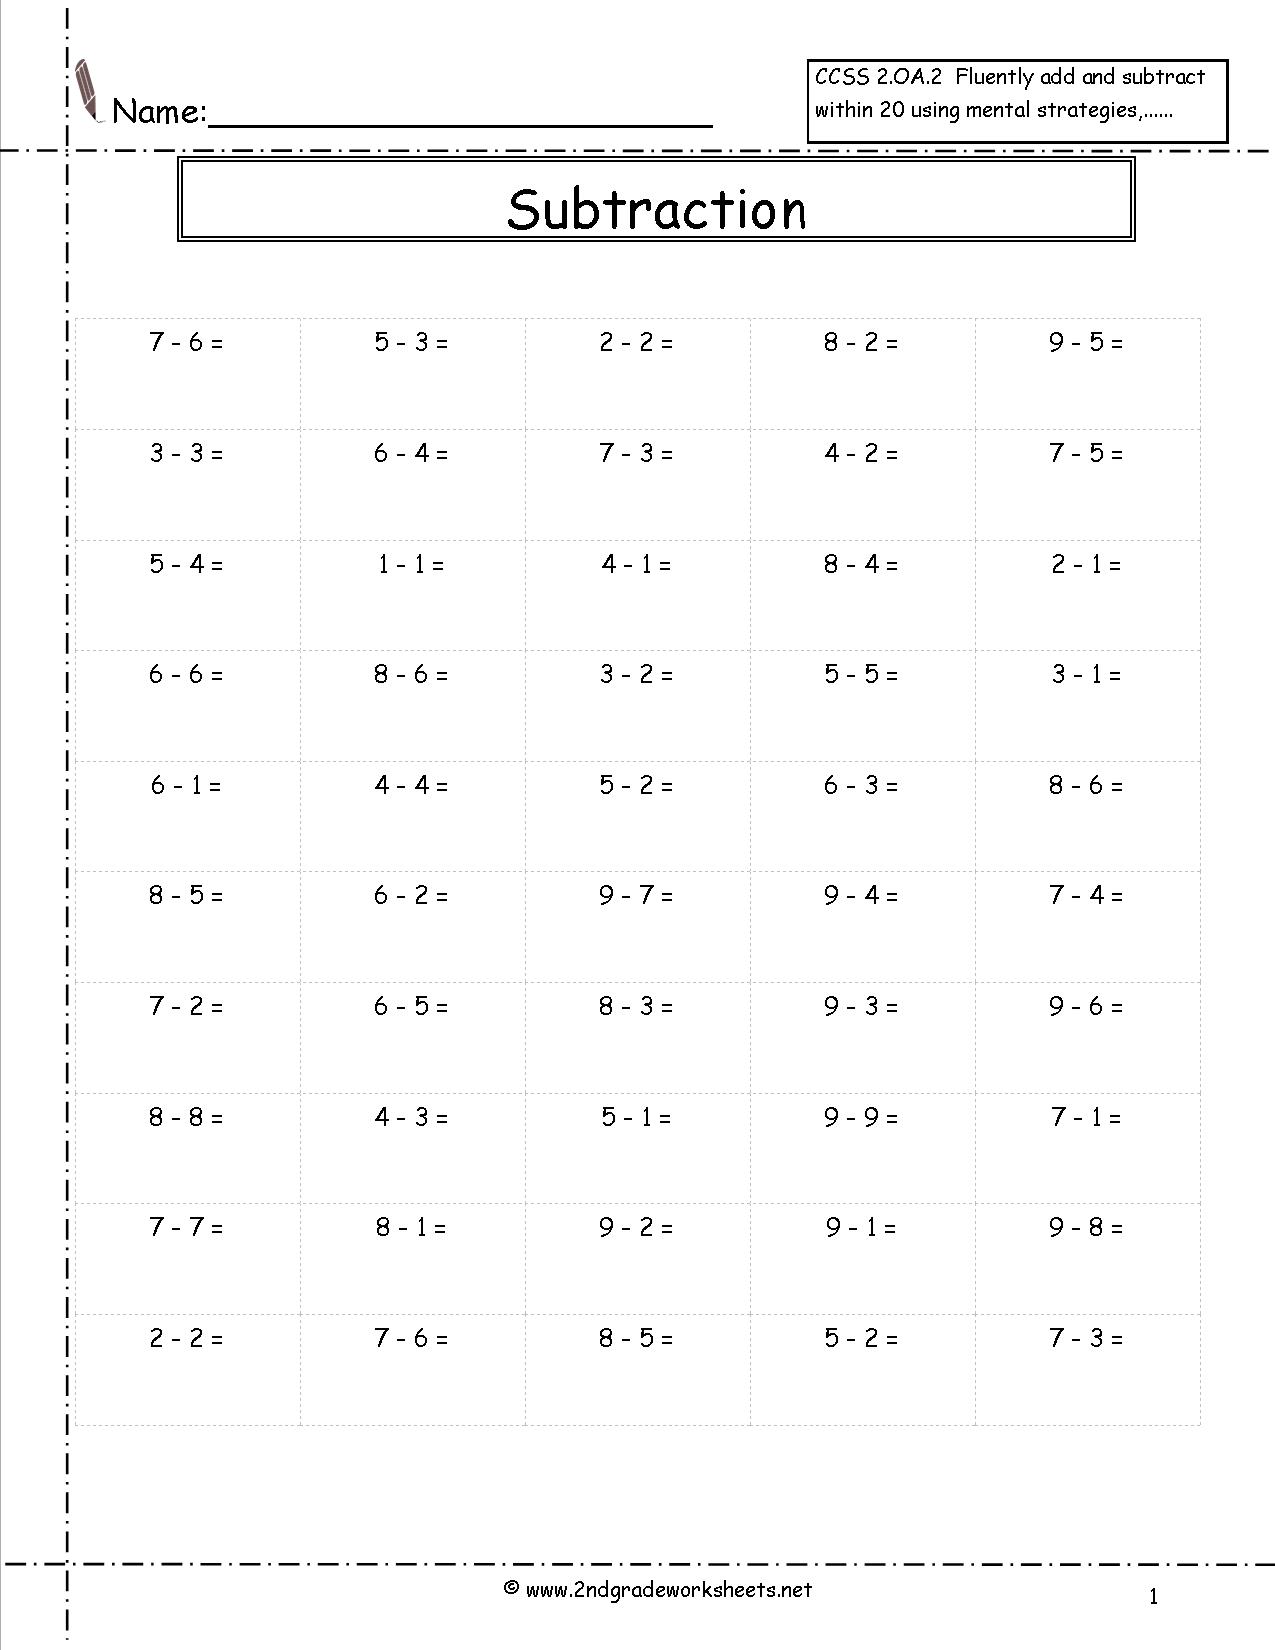 Single Digit Subtraction Worksheets